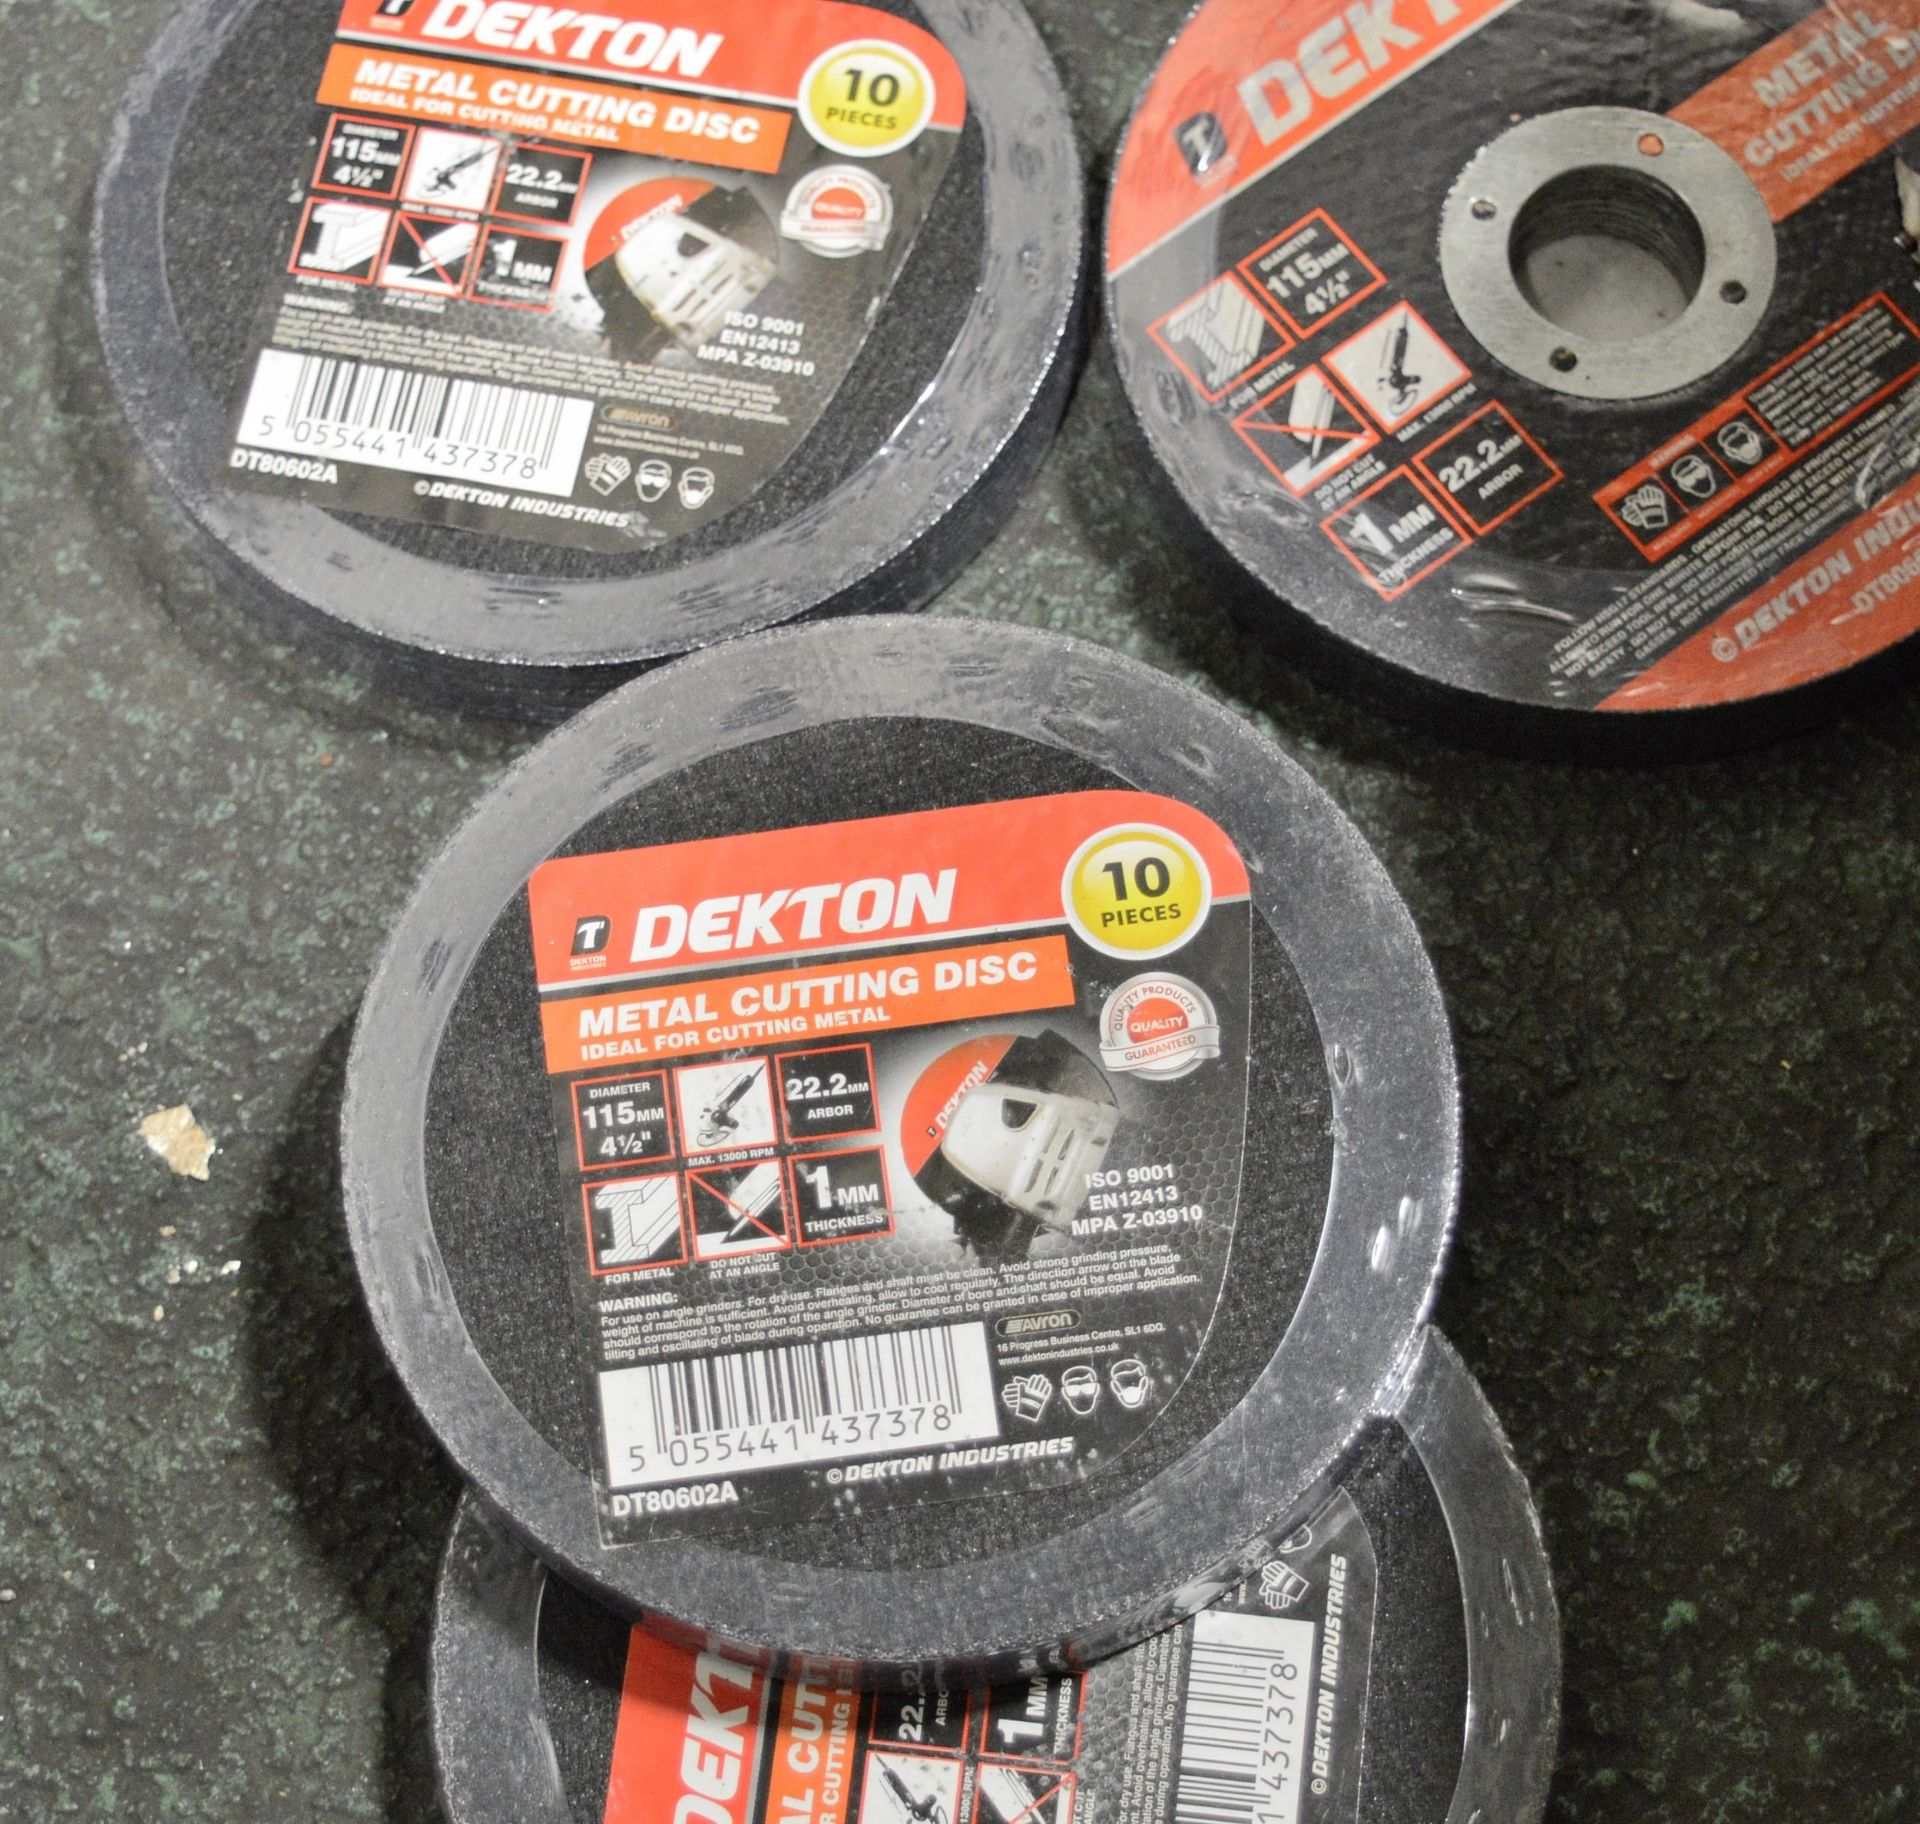 Dekton grinding discs - Image 2 of 2